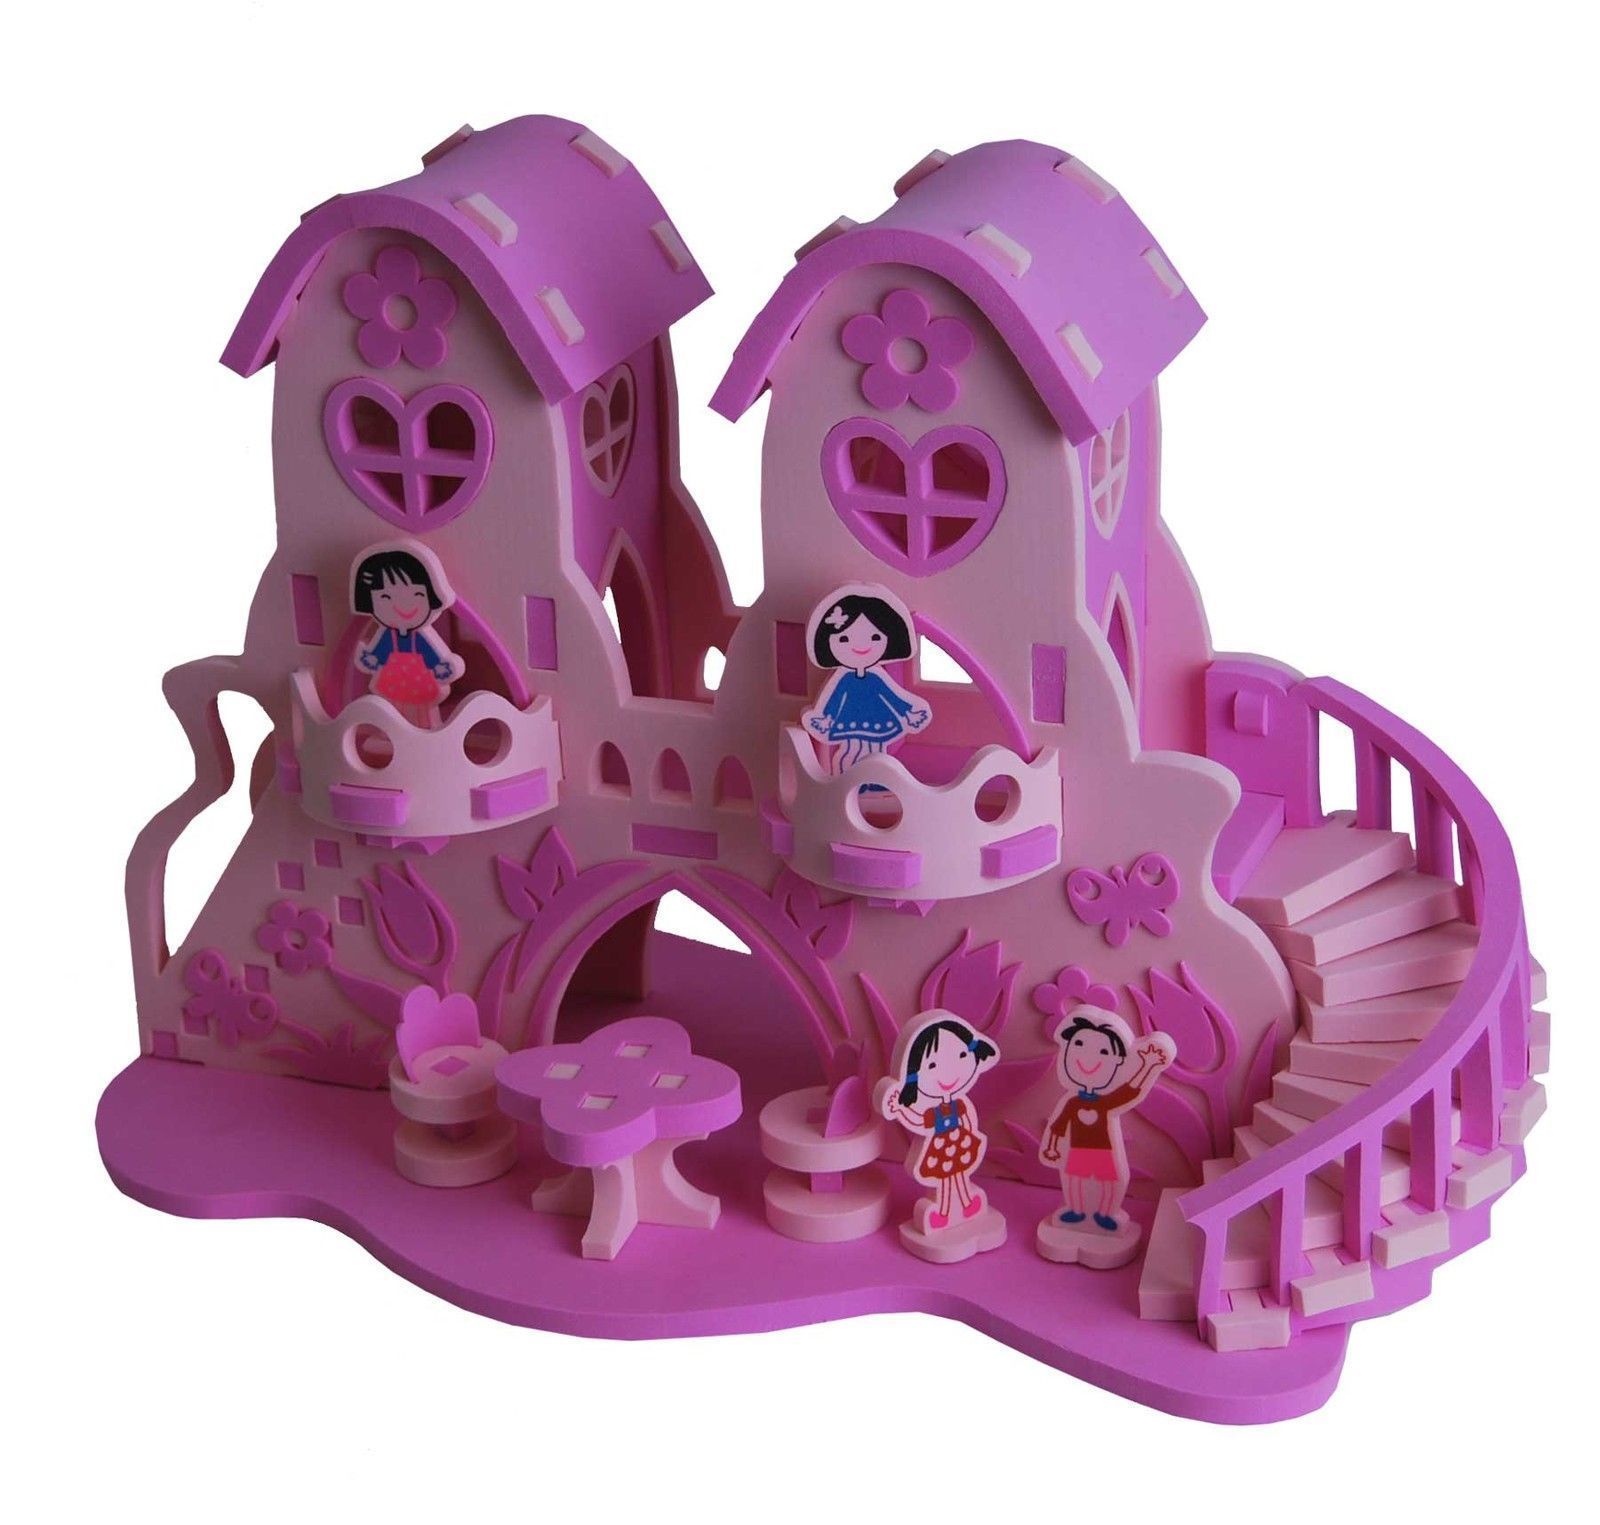 Dollhouse Dolls House Pink Doll Miniature DIY Kit New Girls Play Girl